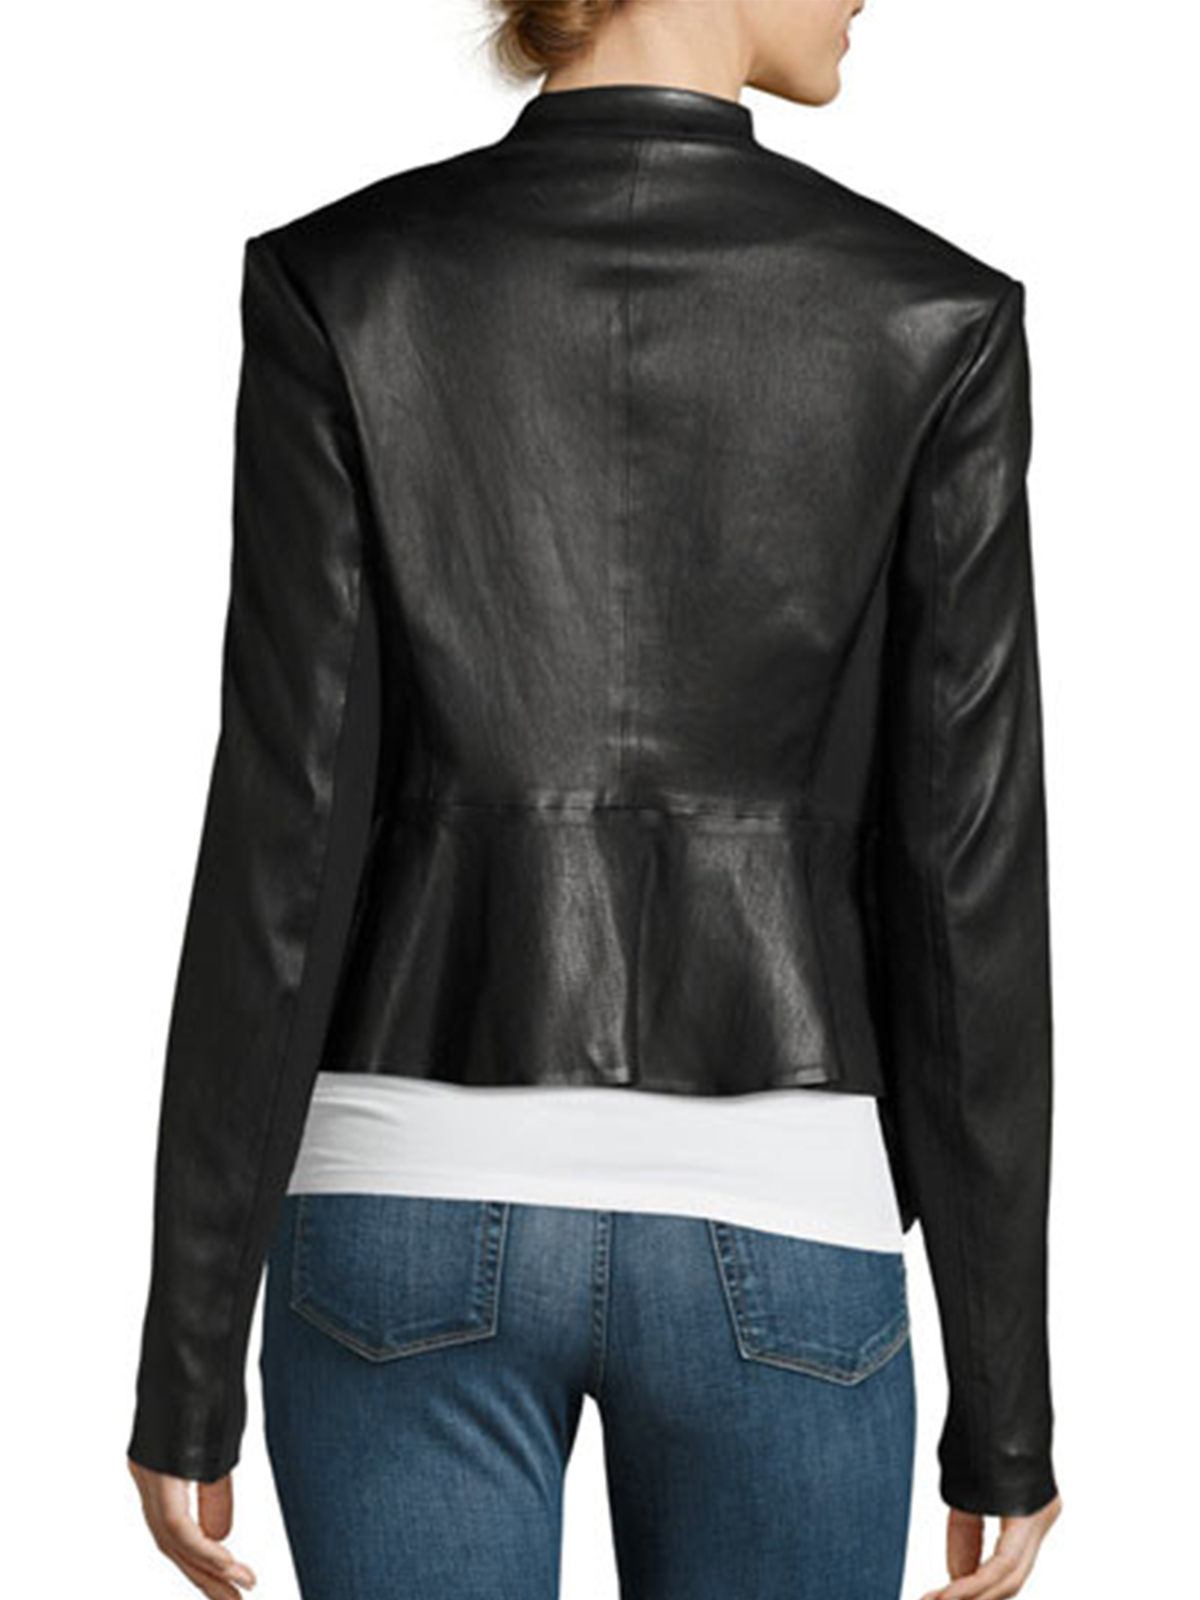 Blouse Black Leather Jacket For Women - Stars Jackets